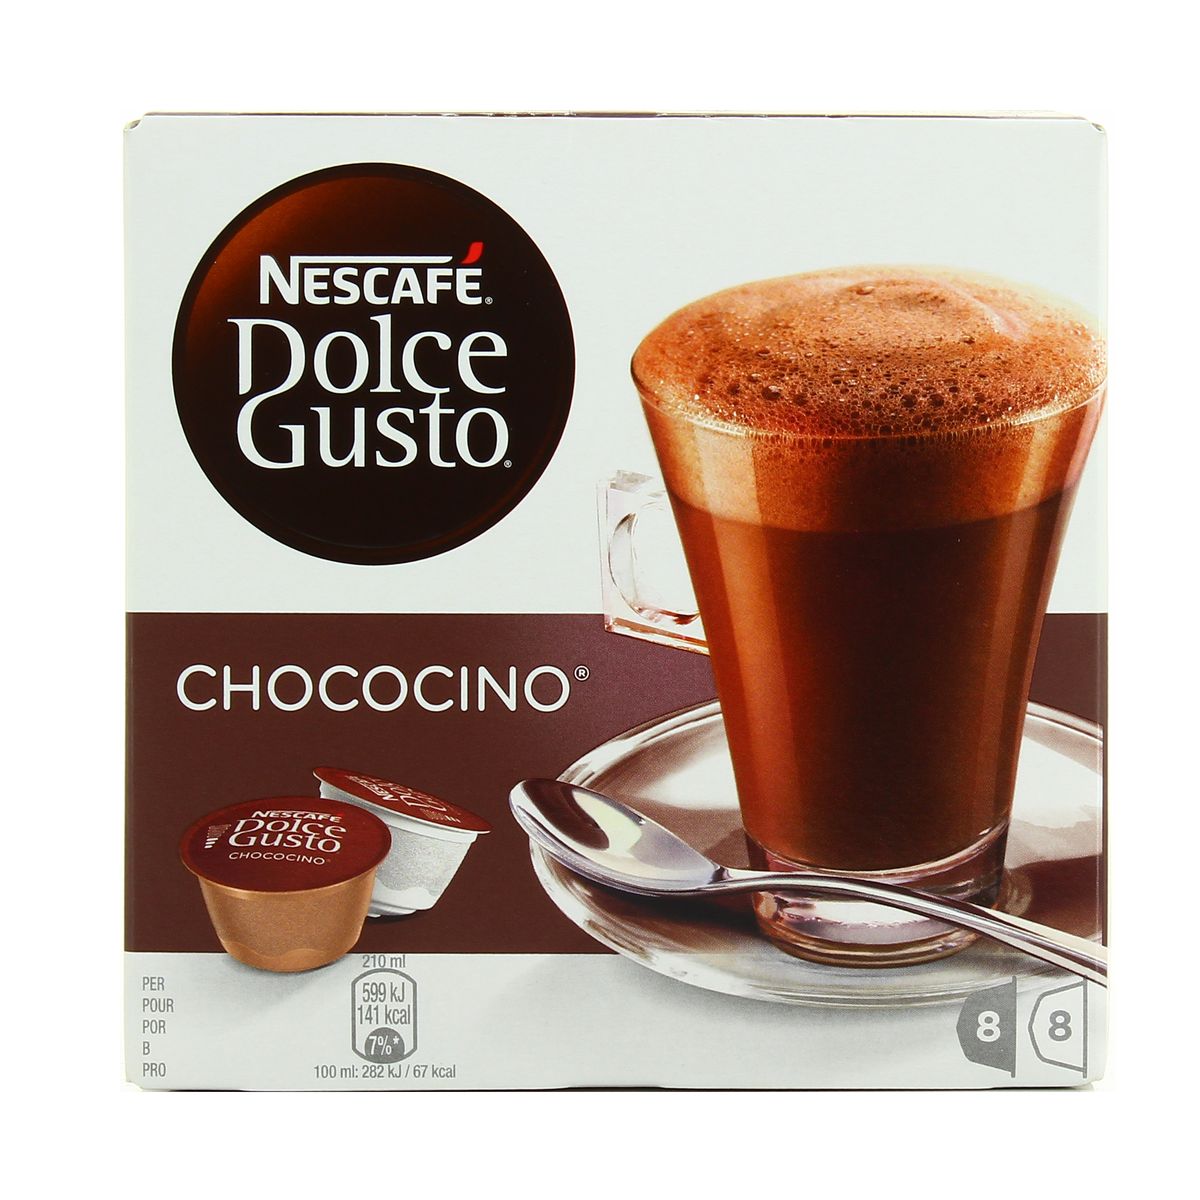 Achat / Vente Promotion Nescafe Dolce Gusto Chococino, 2x8 capsules